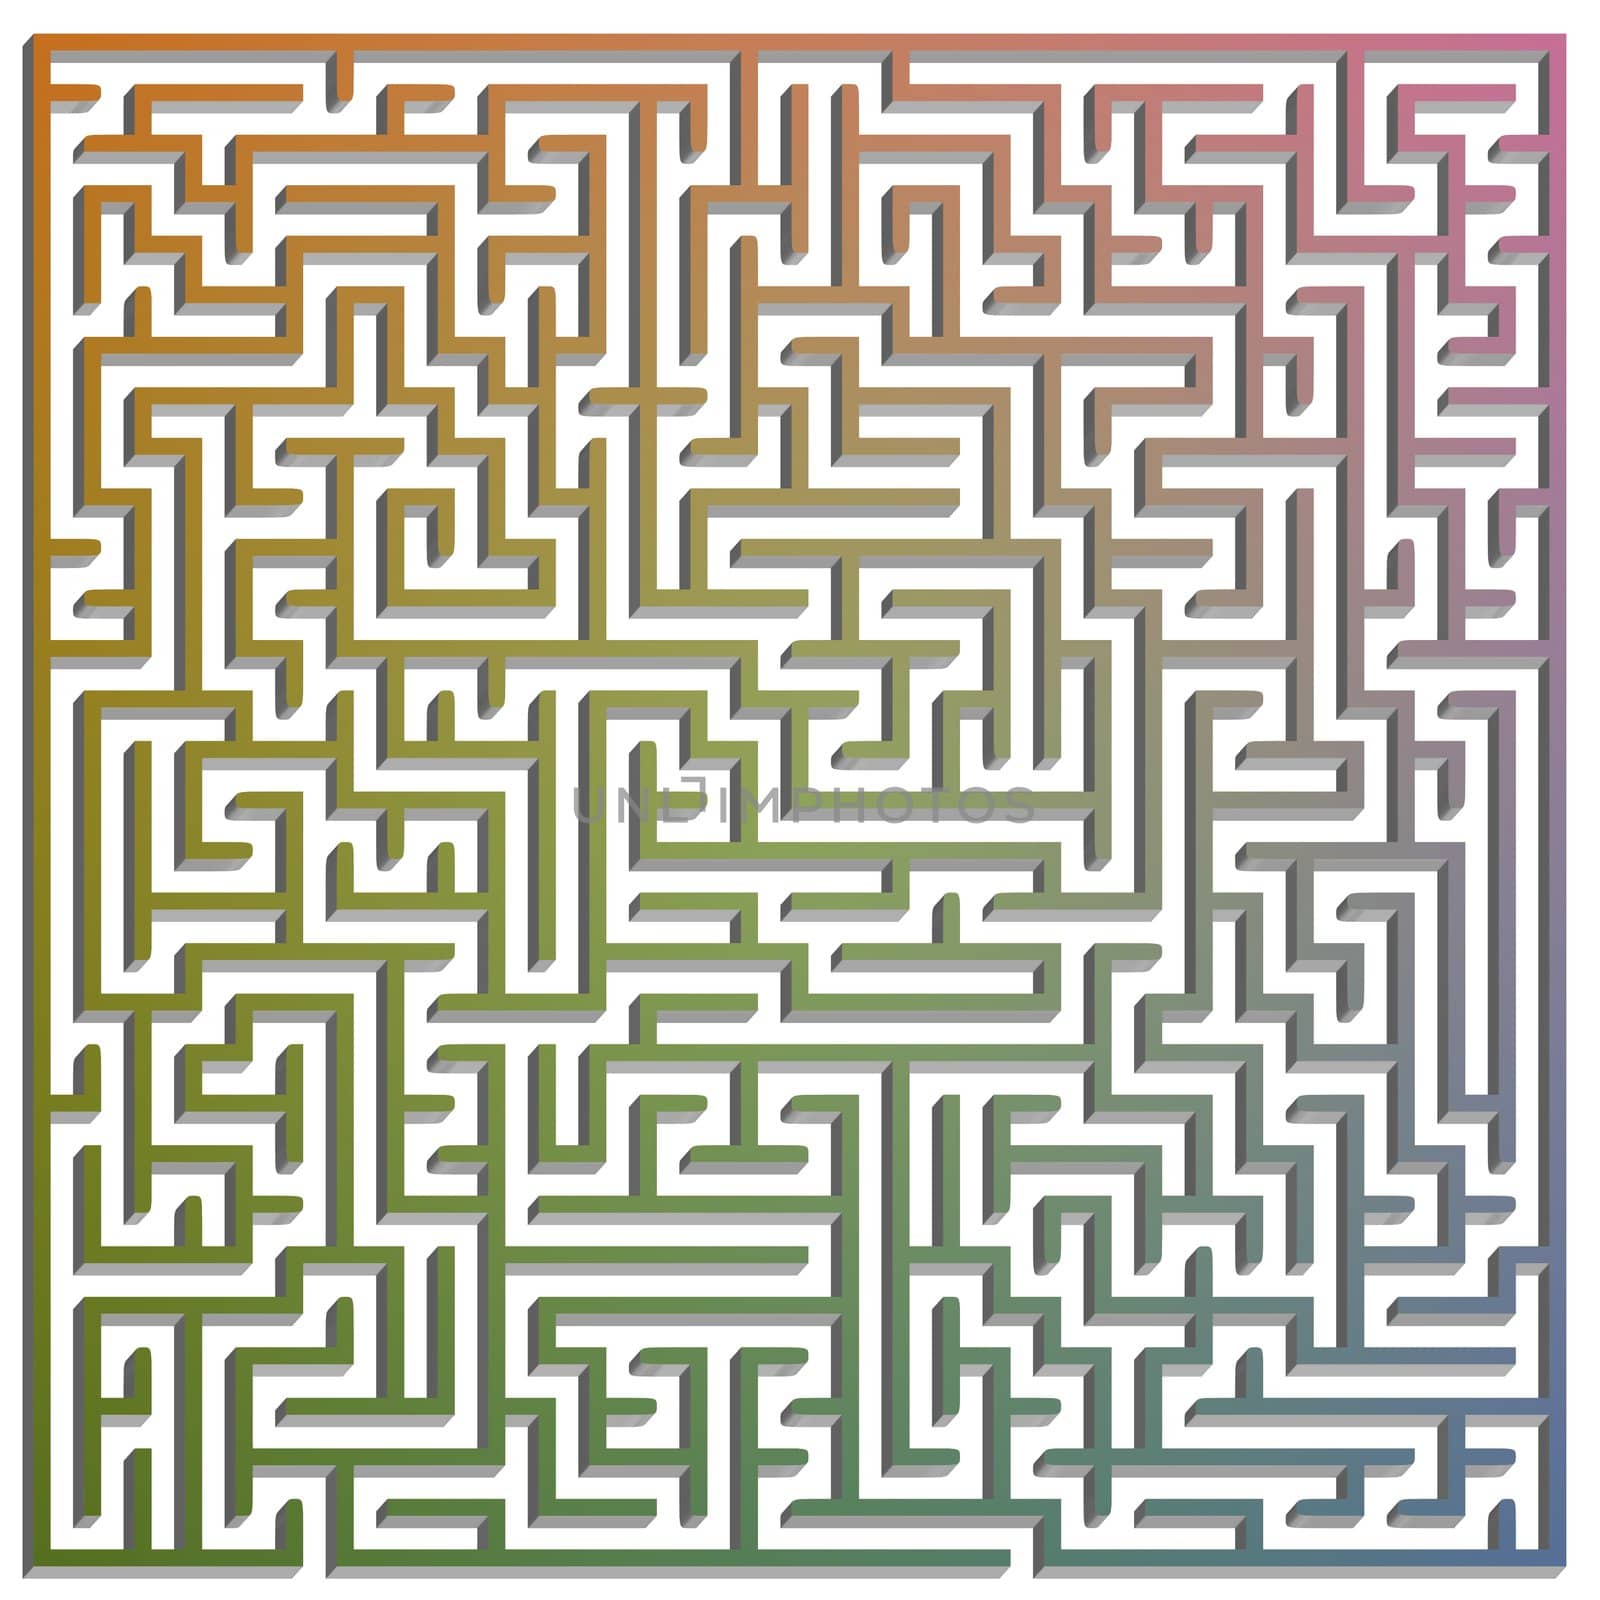 Illustration of a maze slightly extruded